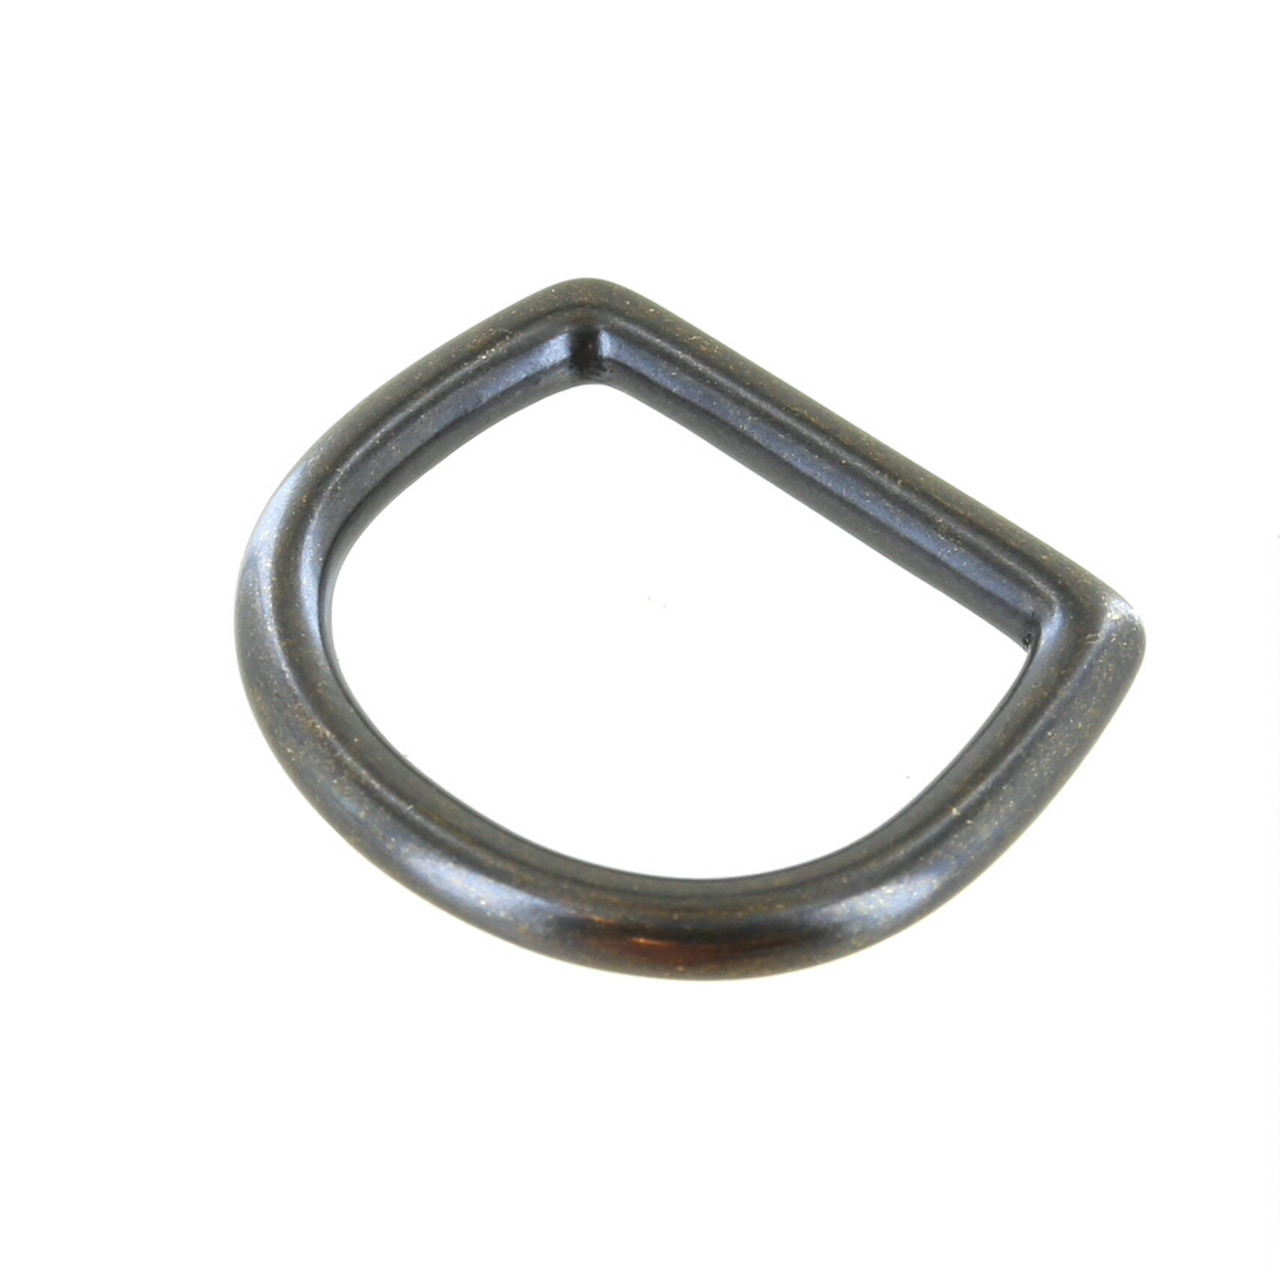 4Pcs Brass Ball Studs Rivets D Ring for Leather Crossbody Purse Craft | eBay